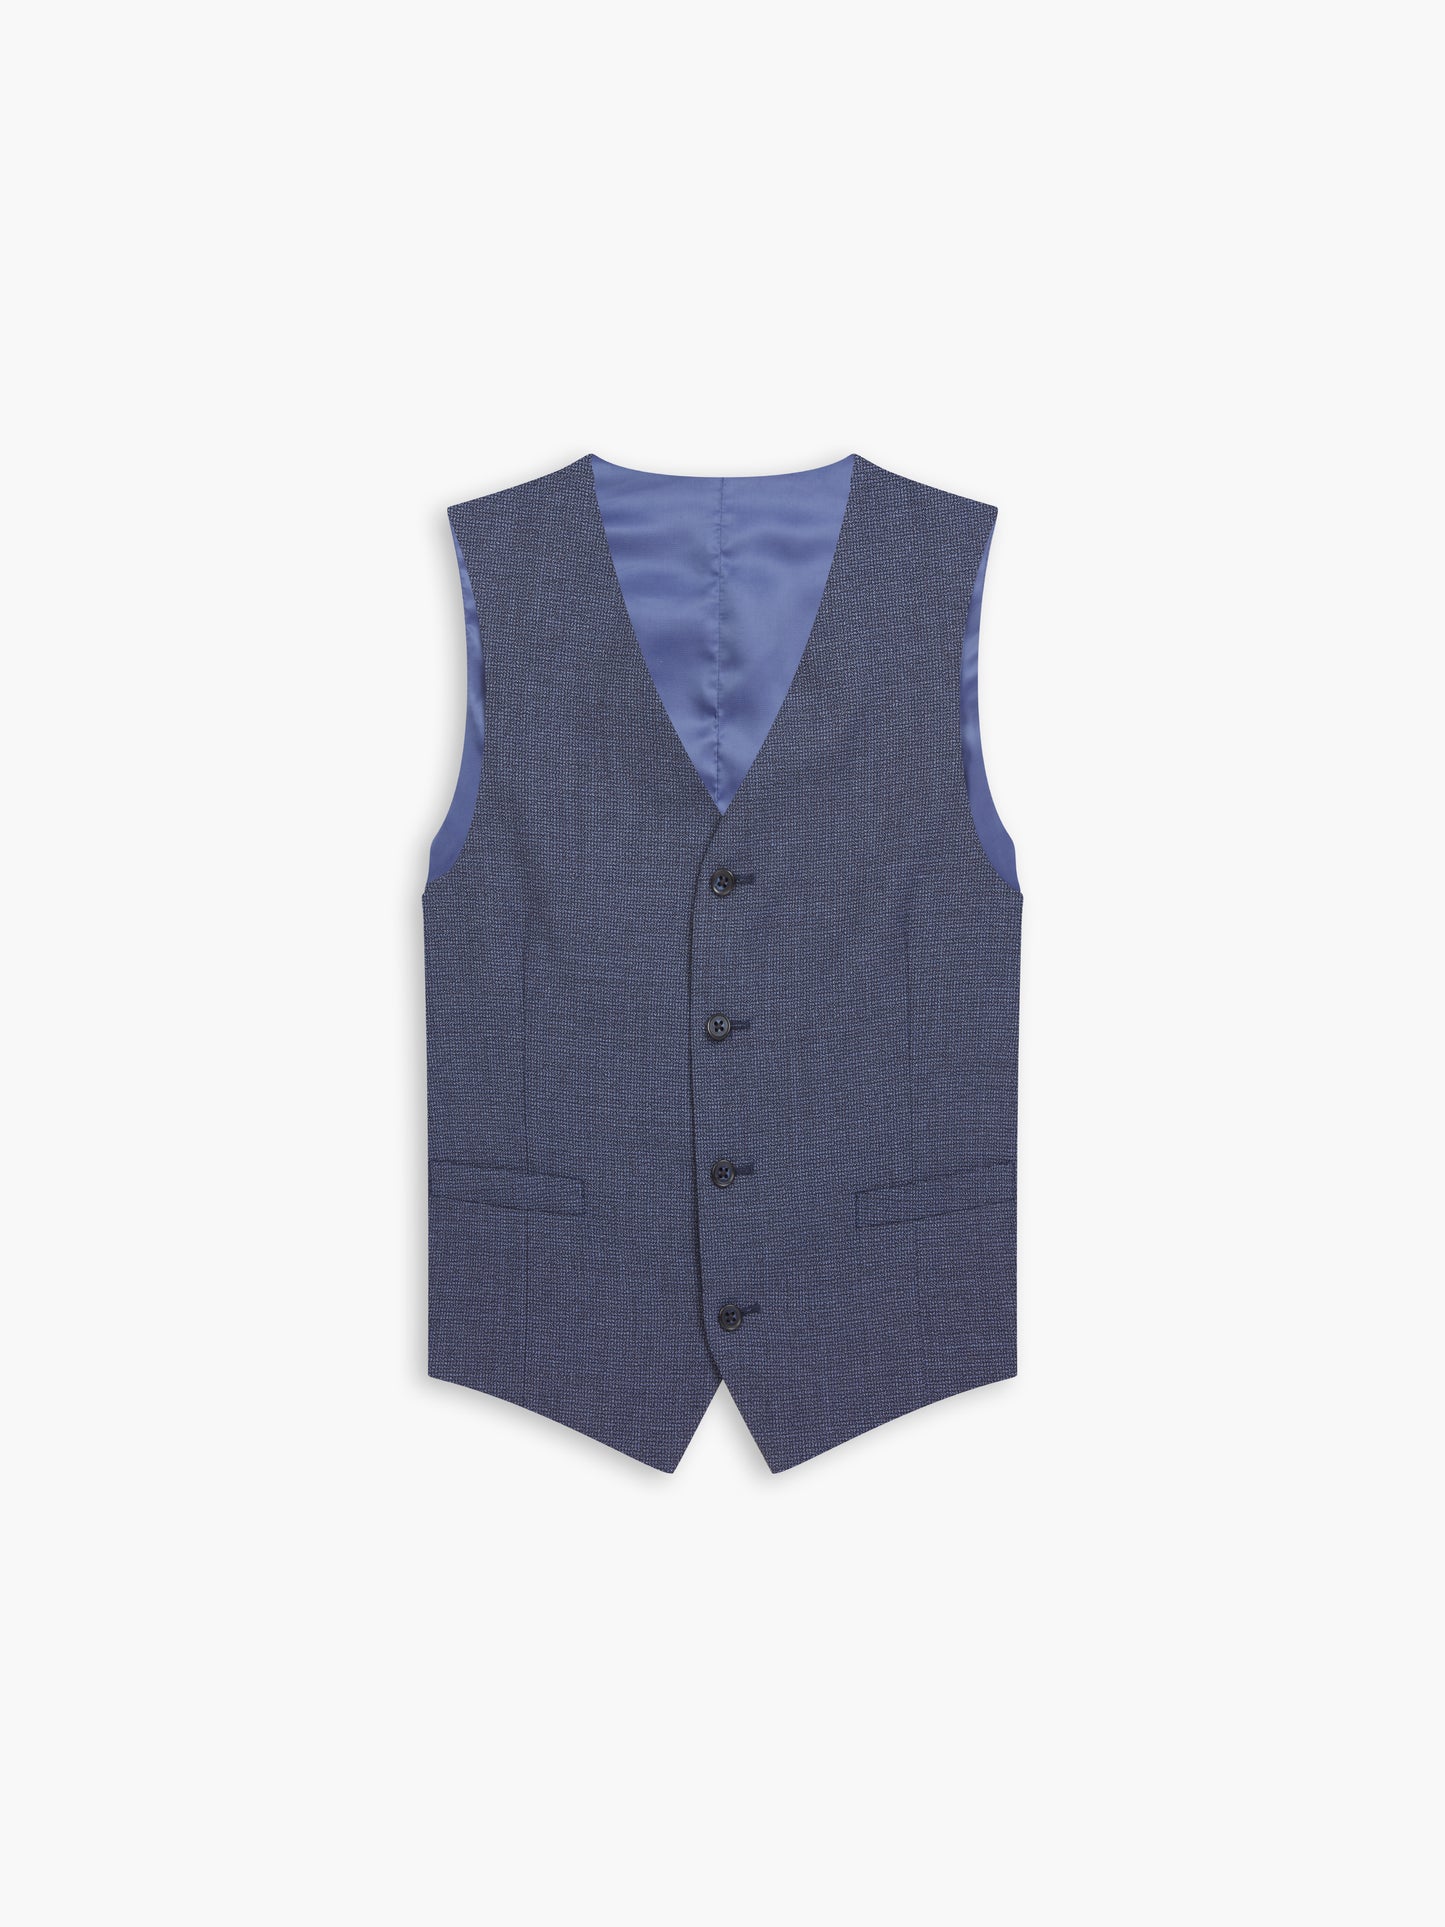 Lovell Infinity Slim Fit Blue Semi Plain Waistcoat